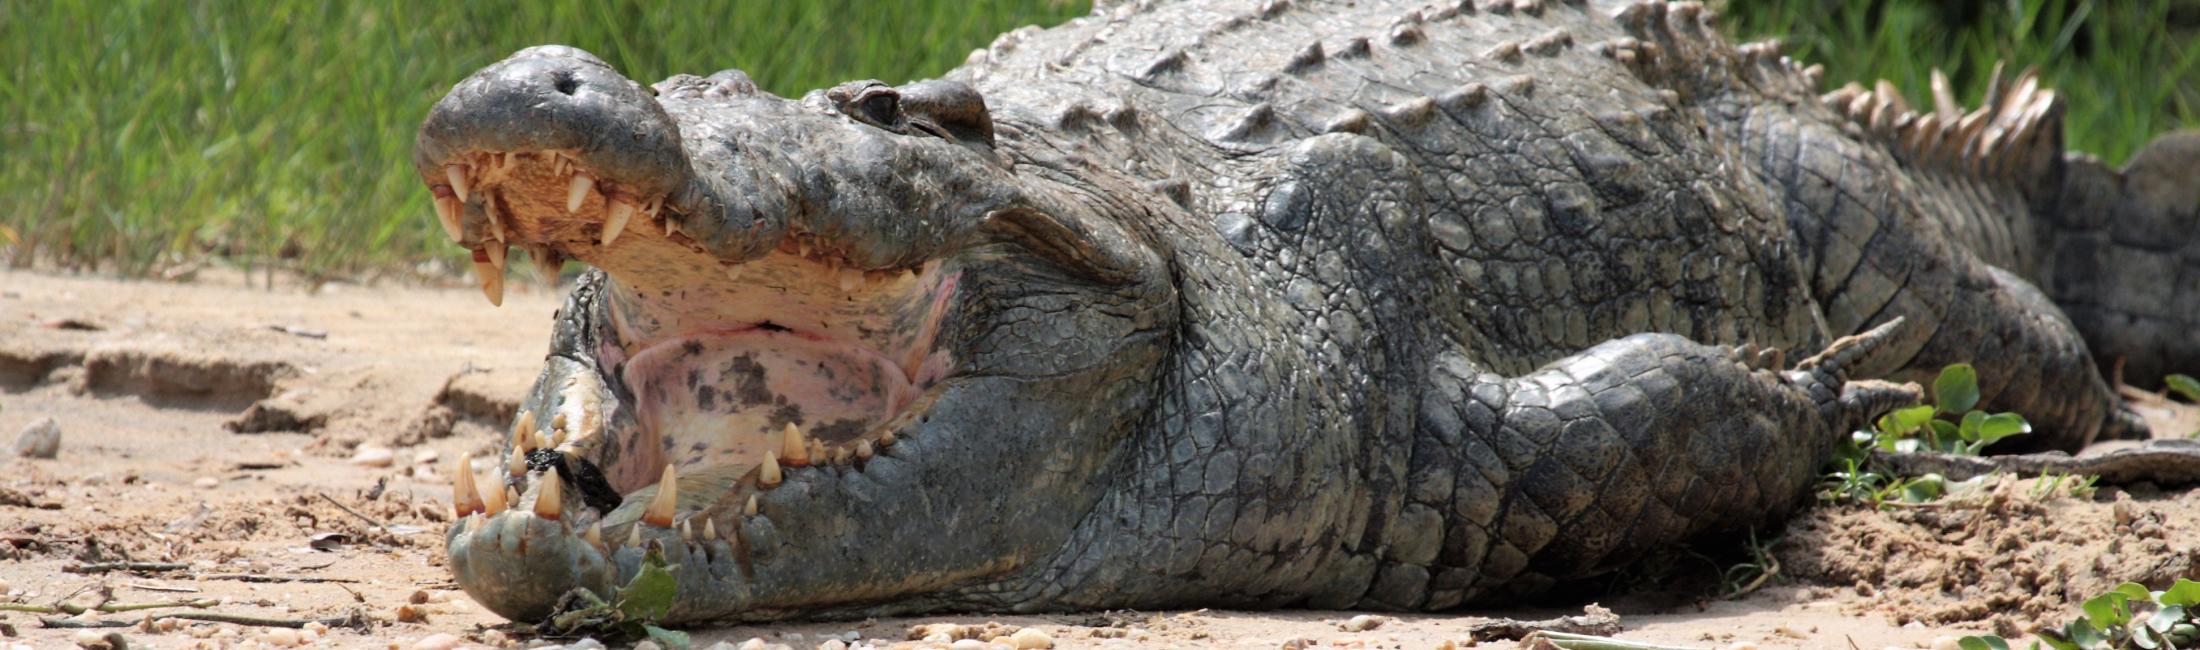 Crocodile on the bank of the Victoria Nile (Murchison Falls National Park, Uganda)